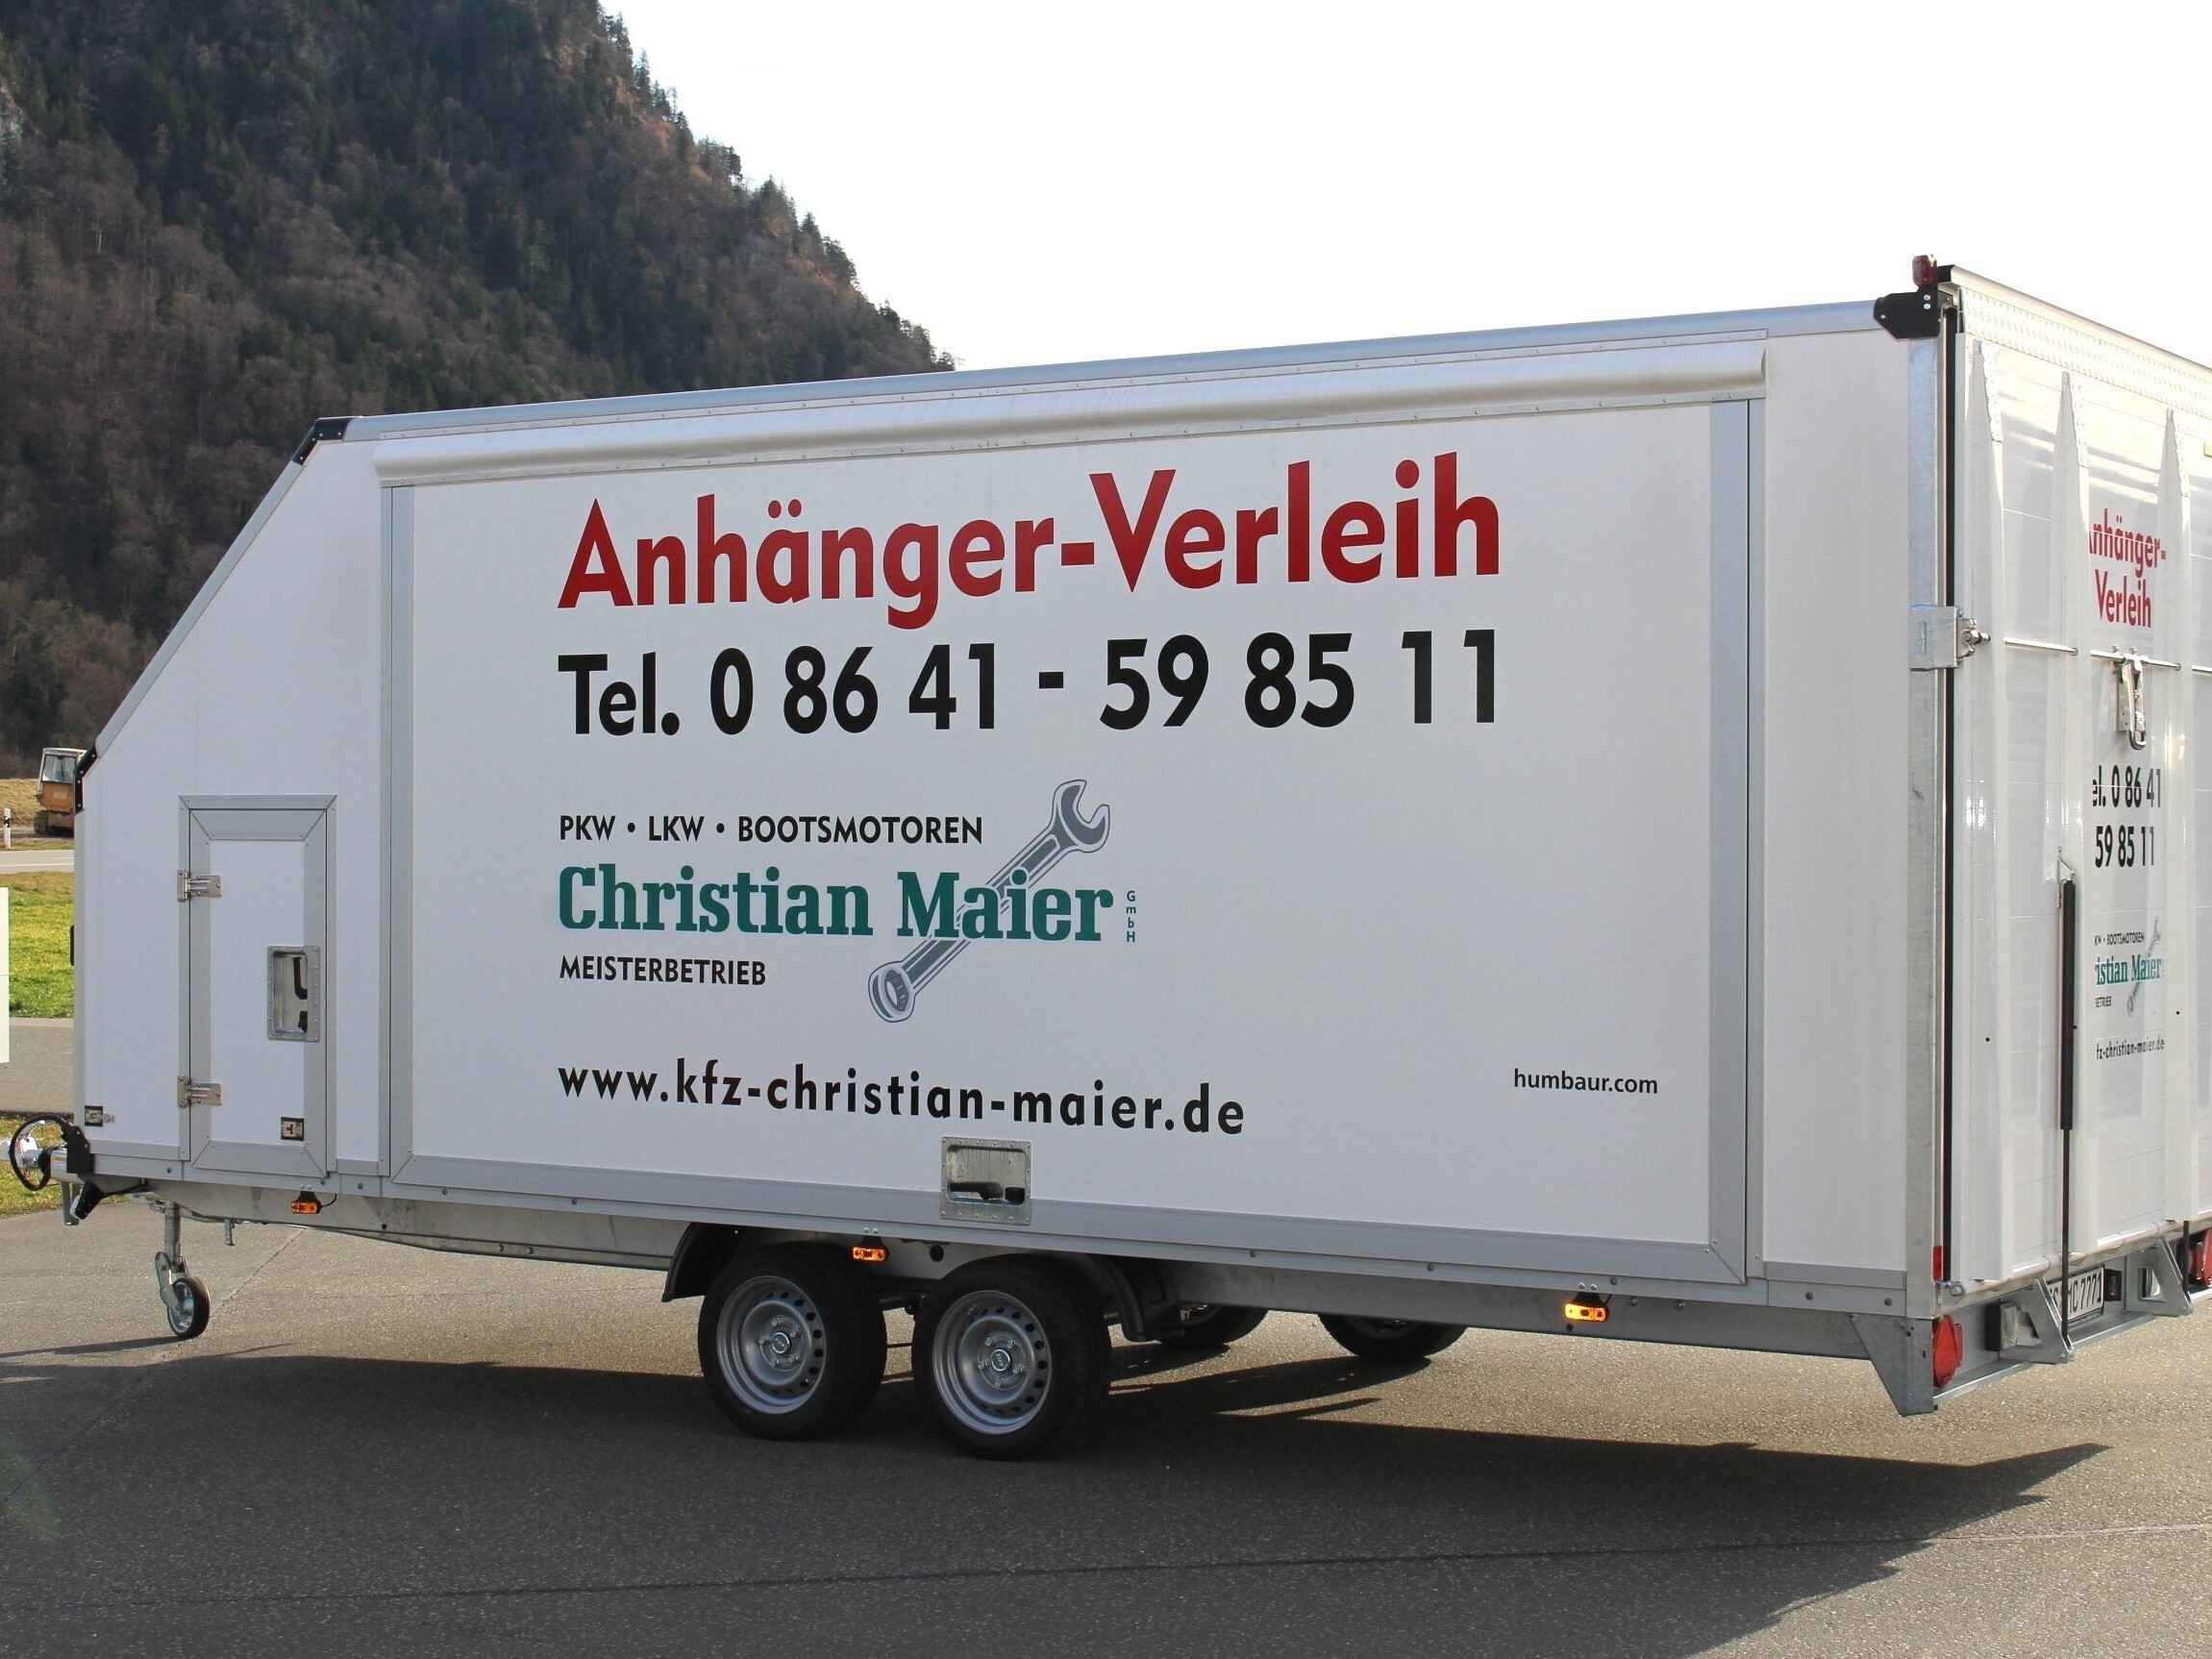 Anhänger Verleih Chiemgau - KFZ Christian Maier